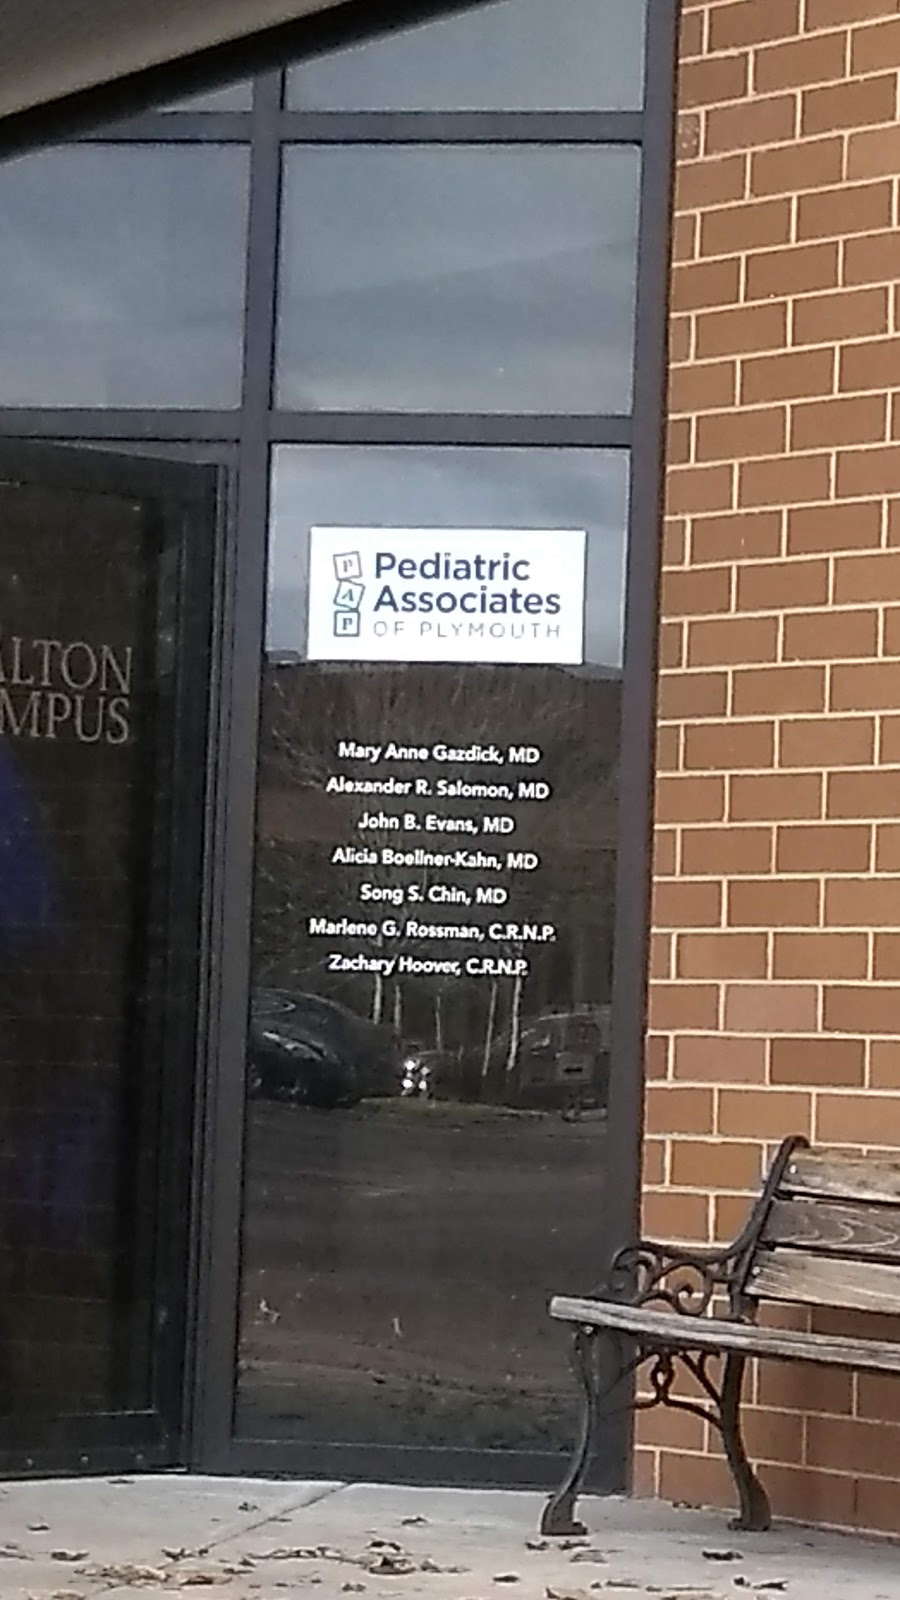 Pediatric Associates-Plymouth: Gazdick Mary Anne MD | 3031 Walton Rd, Plymouth Meeting, PA 19462 | Phone: (610) 825-3500